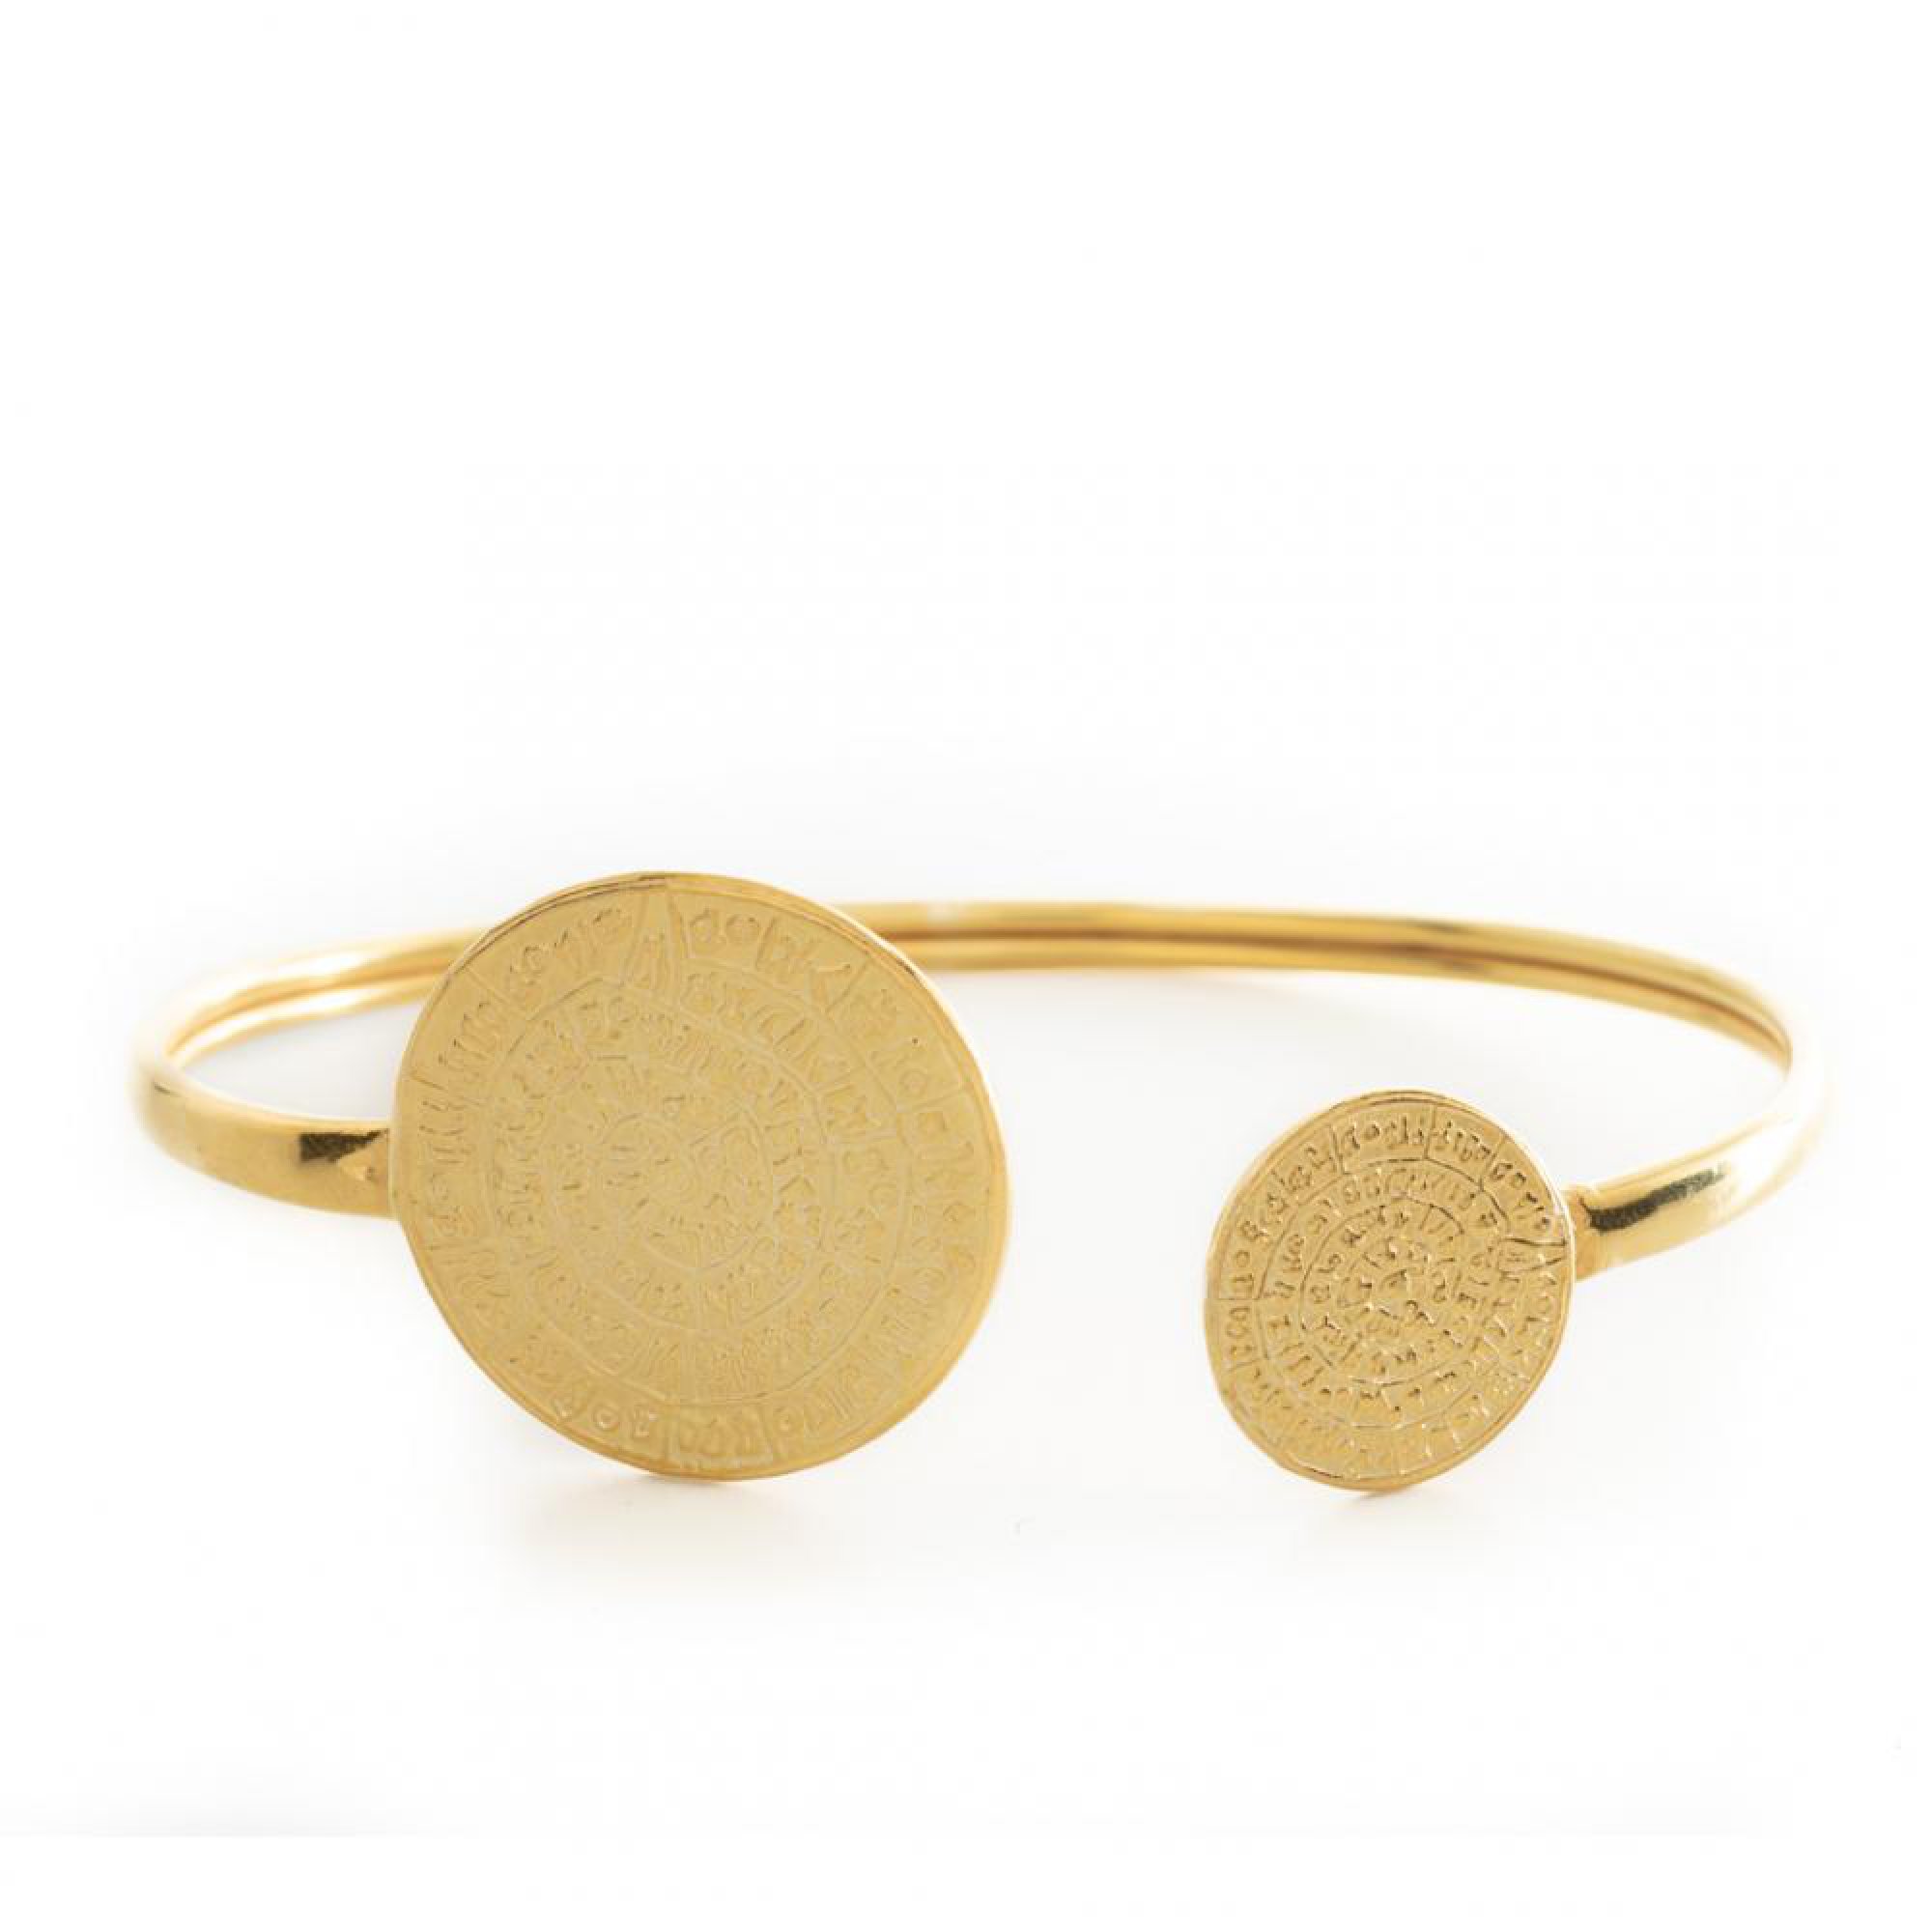 Gold plated adjustable Faistos Disc bracelet